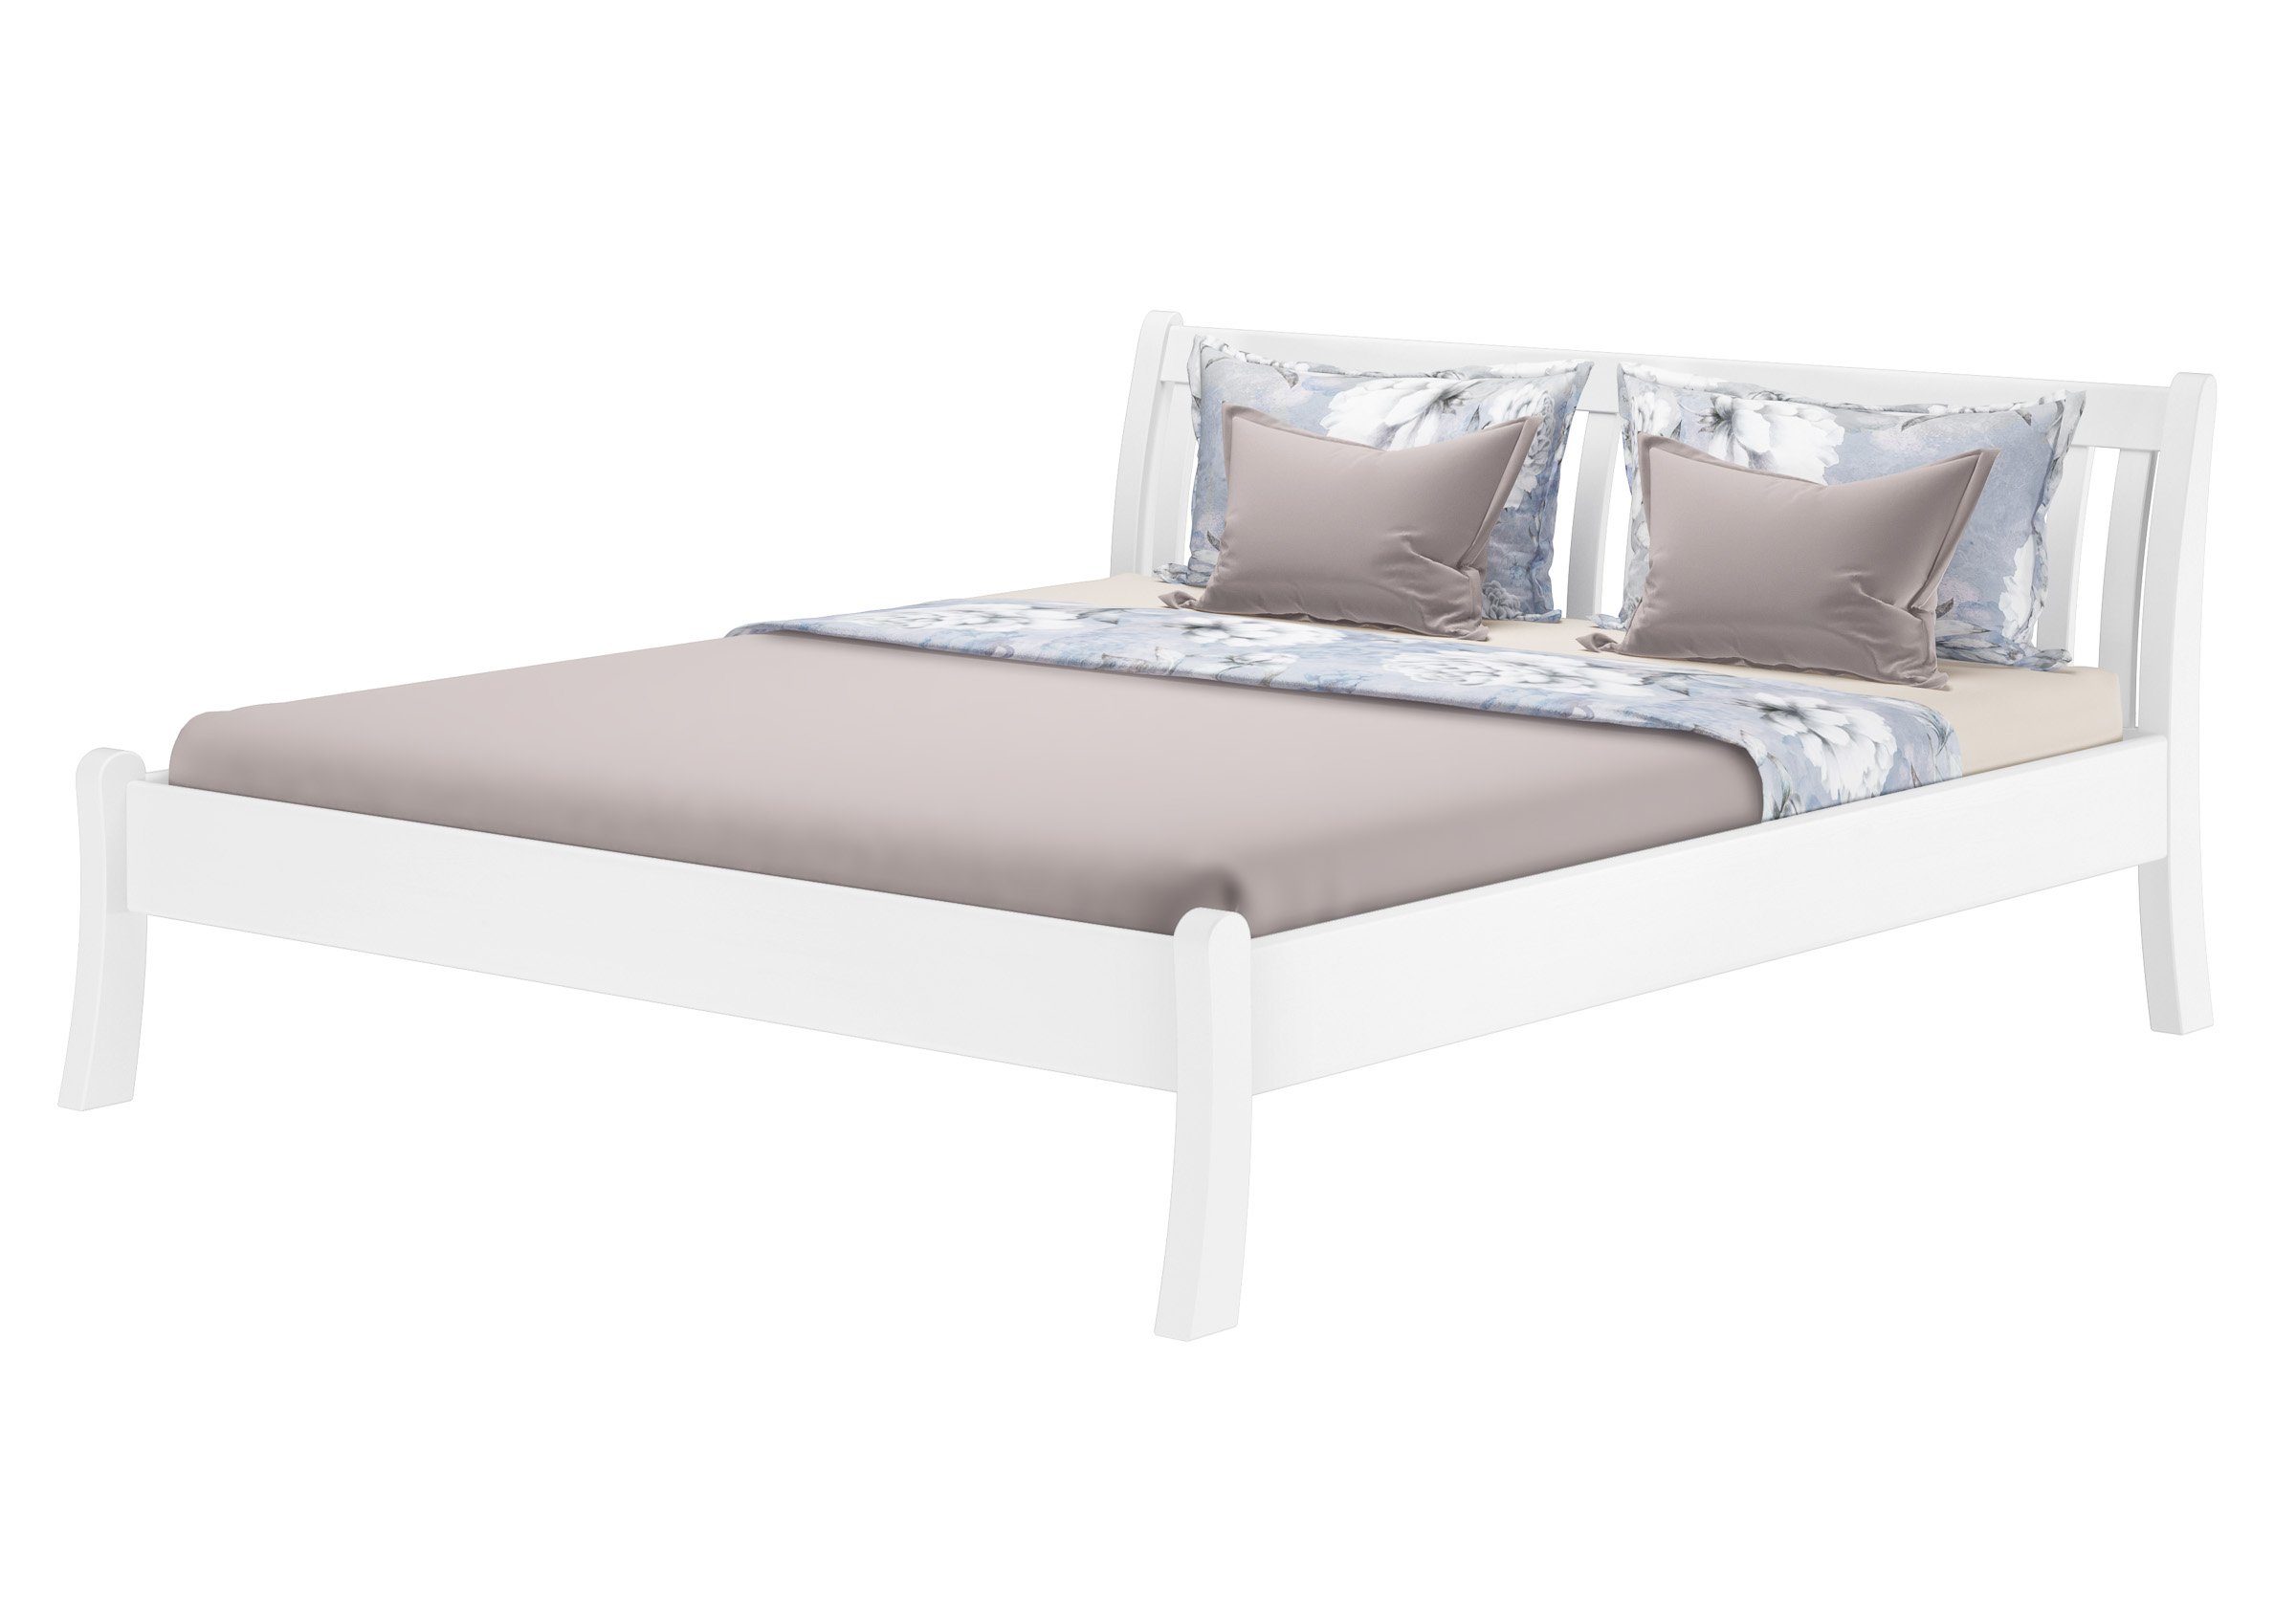 ERST-HOLZ Bett Doppelbett hohe Sitzkante Kiefer weiß 180x200 cm, Kieferwaschweiß